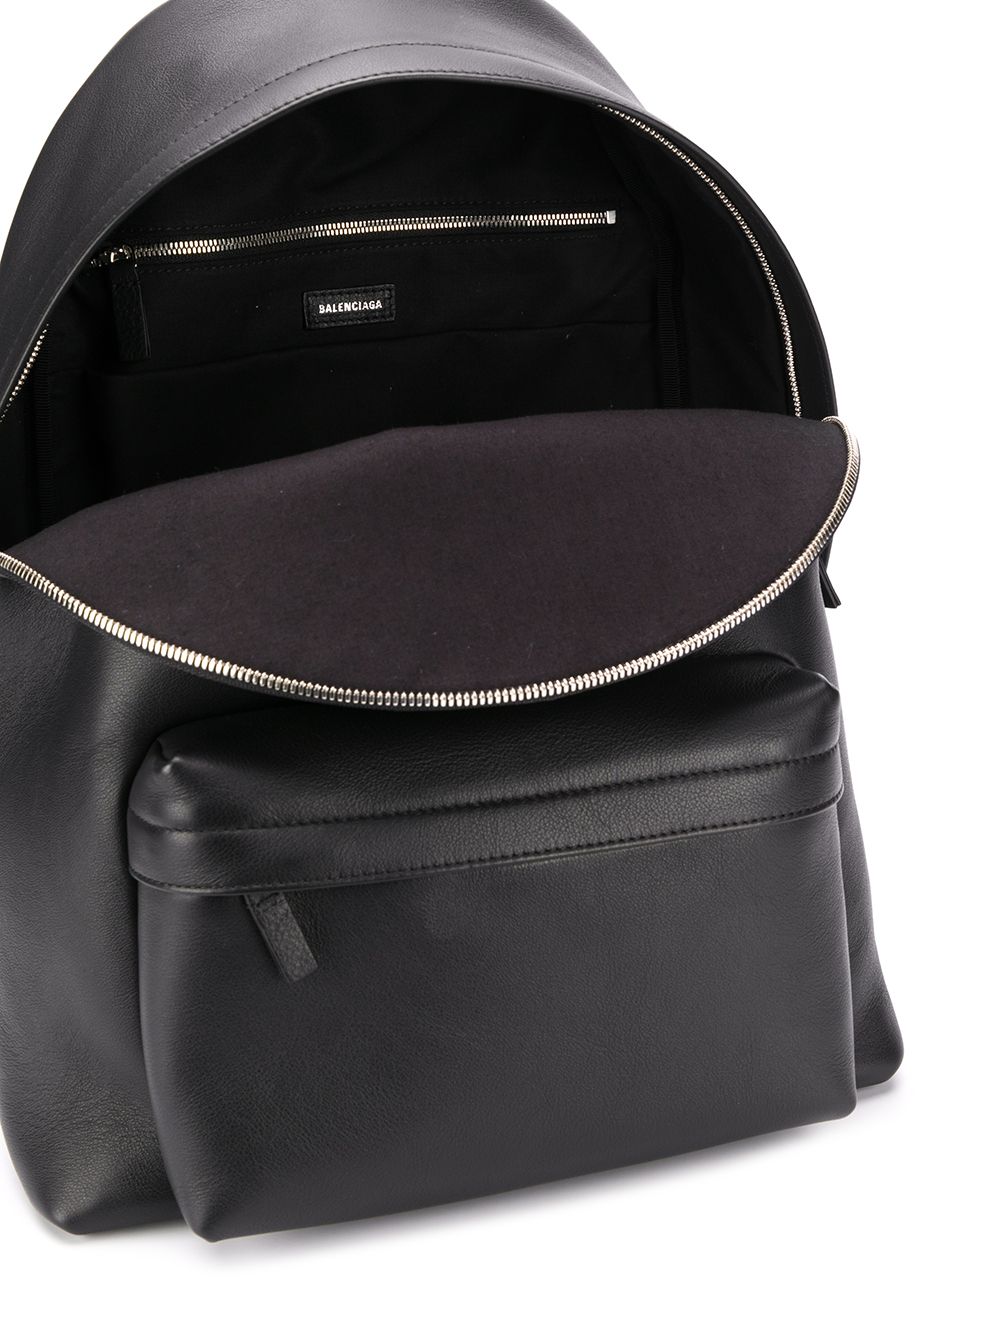 фото Balenciaga рюкзак everyday